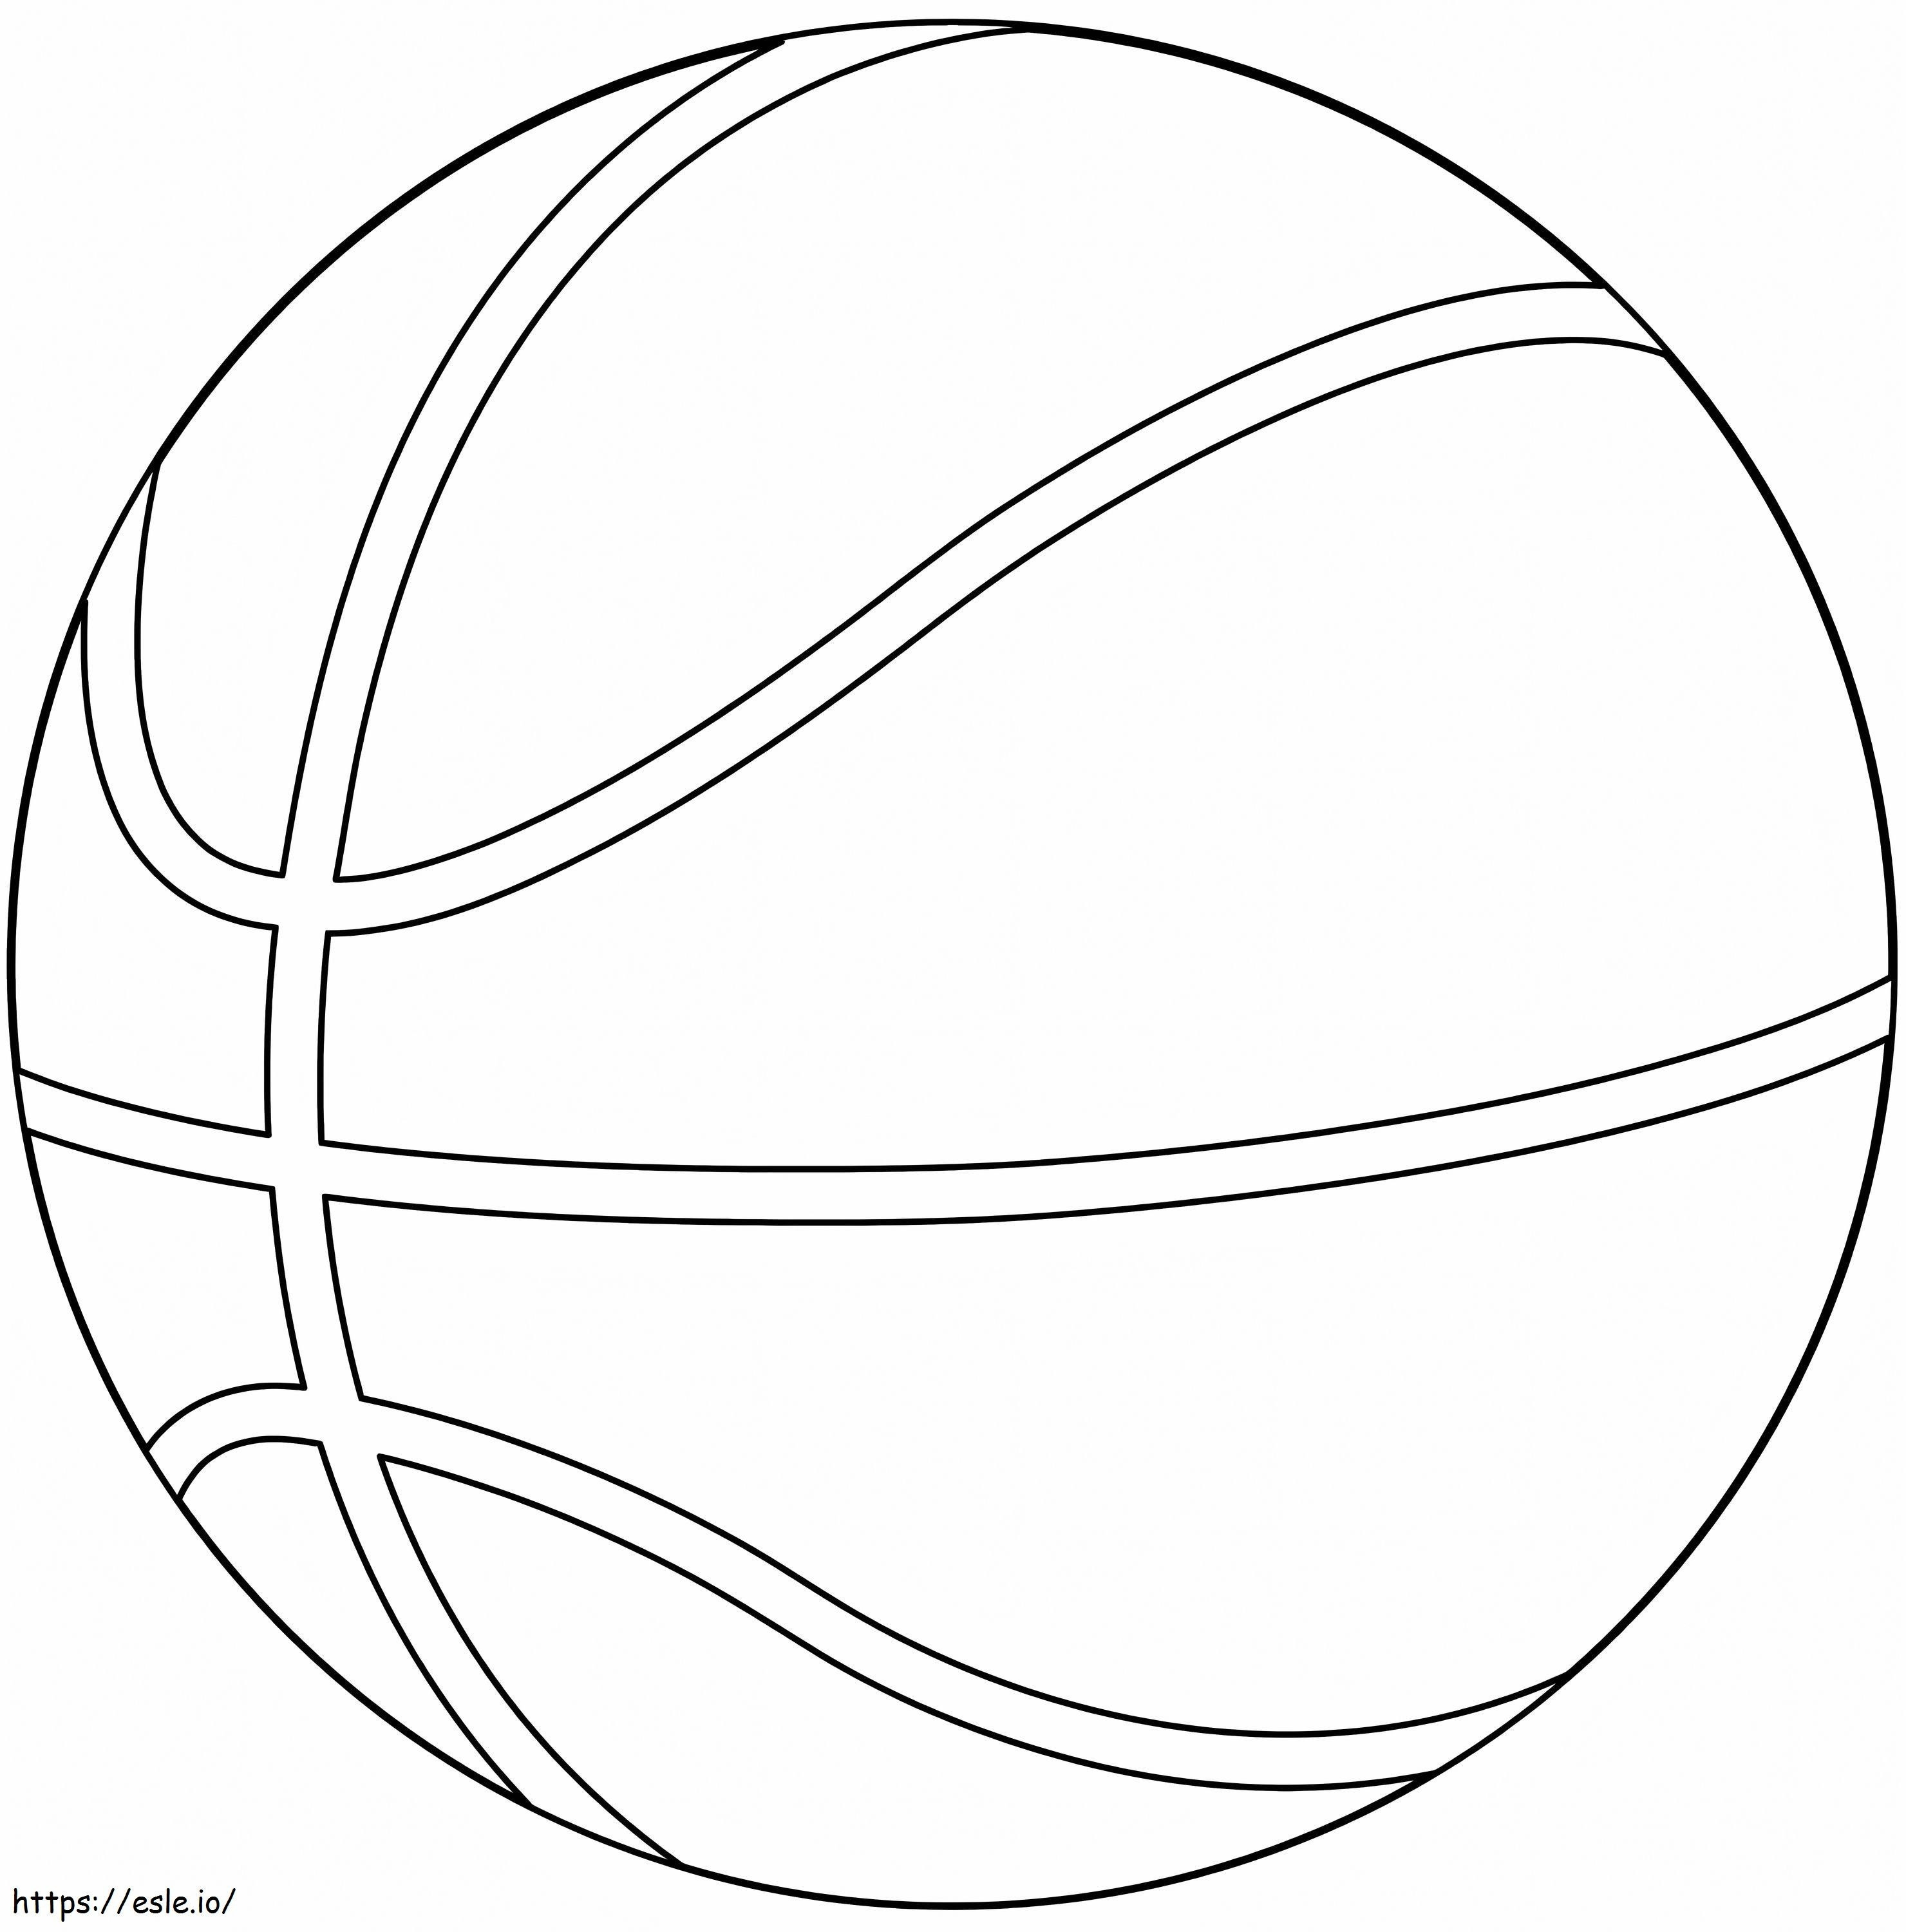 Basic Basketball coloring page